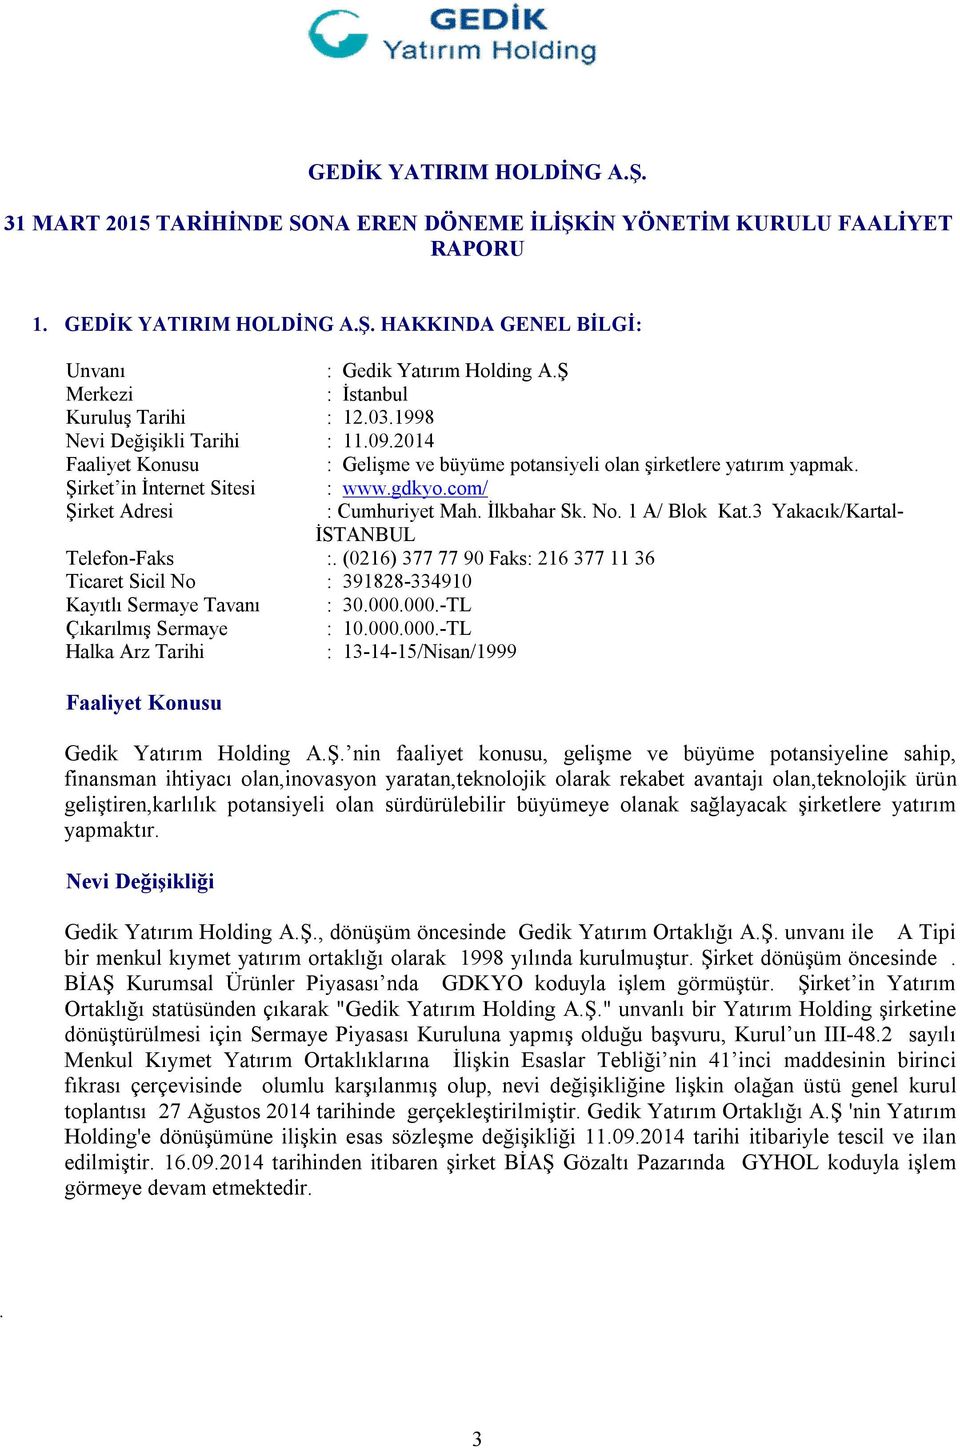 gdkyo.com/ Şirket Adresi : Cumhuriyet Mah. İlkbahar Sk. No. 1 A/ Blok Kat.3 Yakacık/Kartal- İSTANBUL Telefon-Faks :.